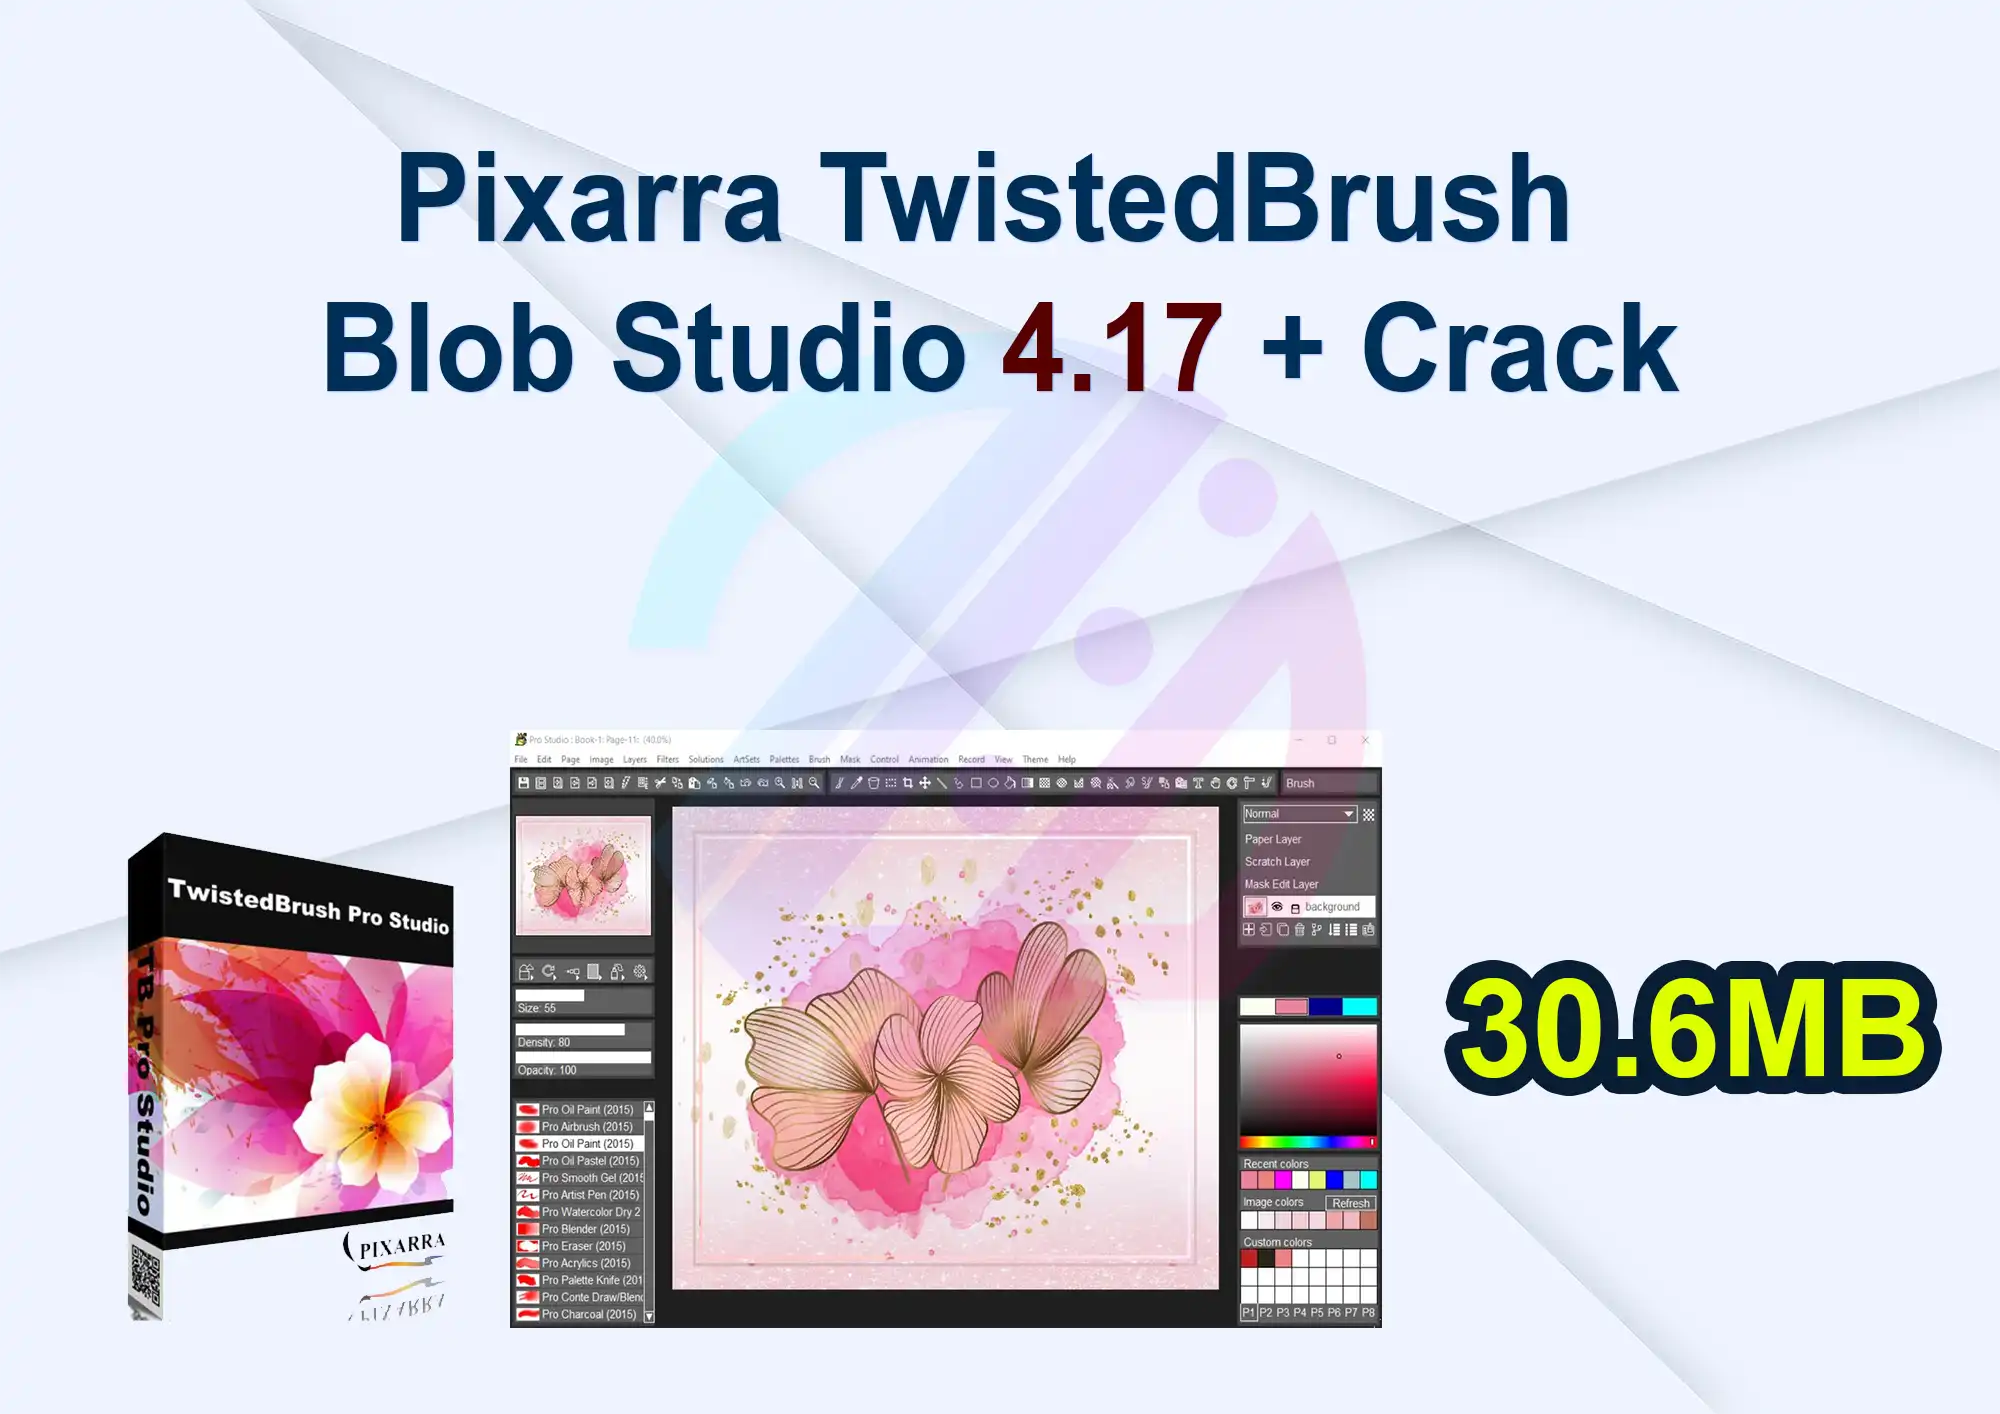 Pixarra TwistedBrush Blob Studio 4.17 + Crack